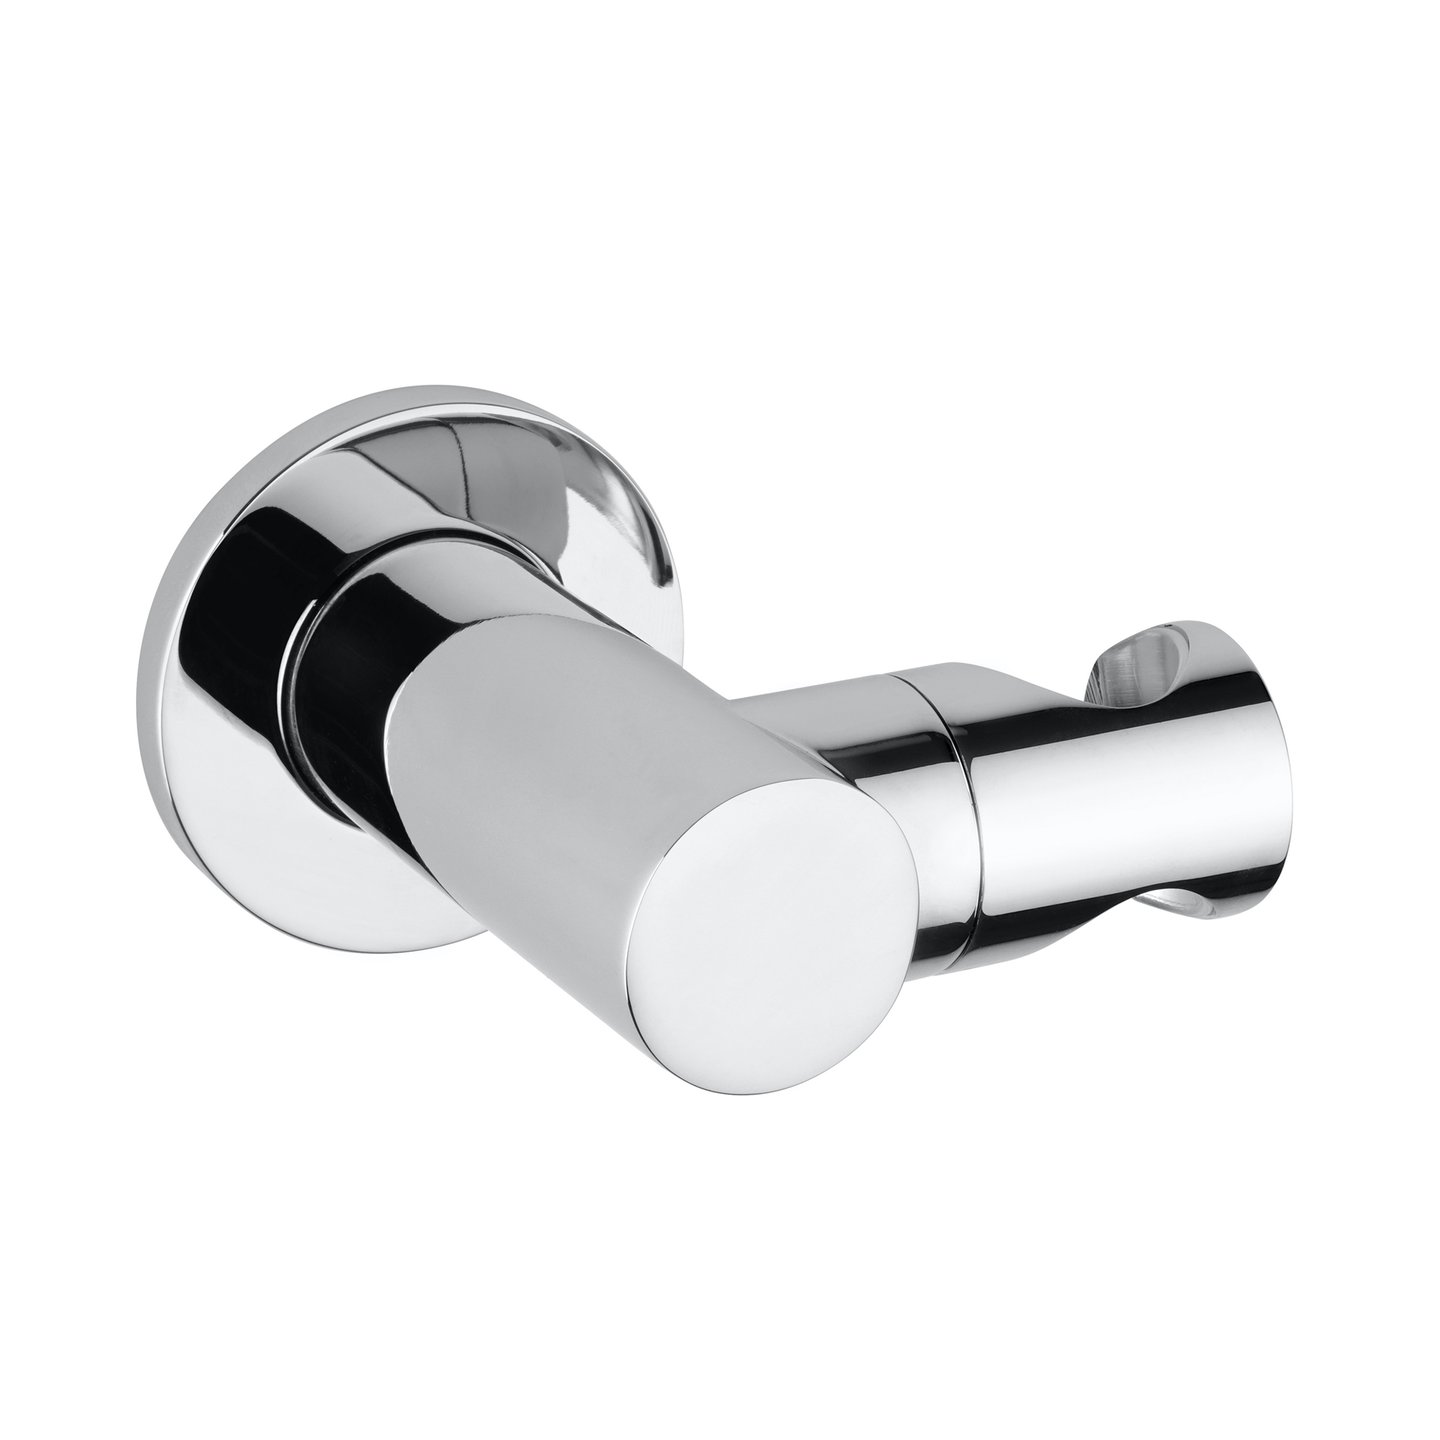 Fortis shower bracket movable, metal, round chrome - 5318500PC | REUTER